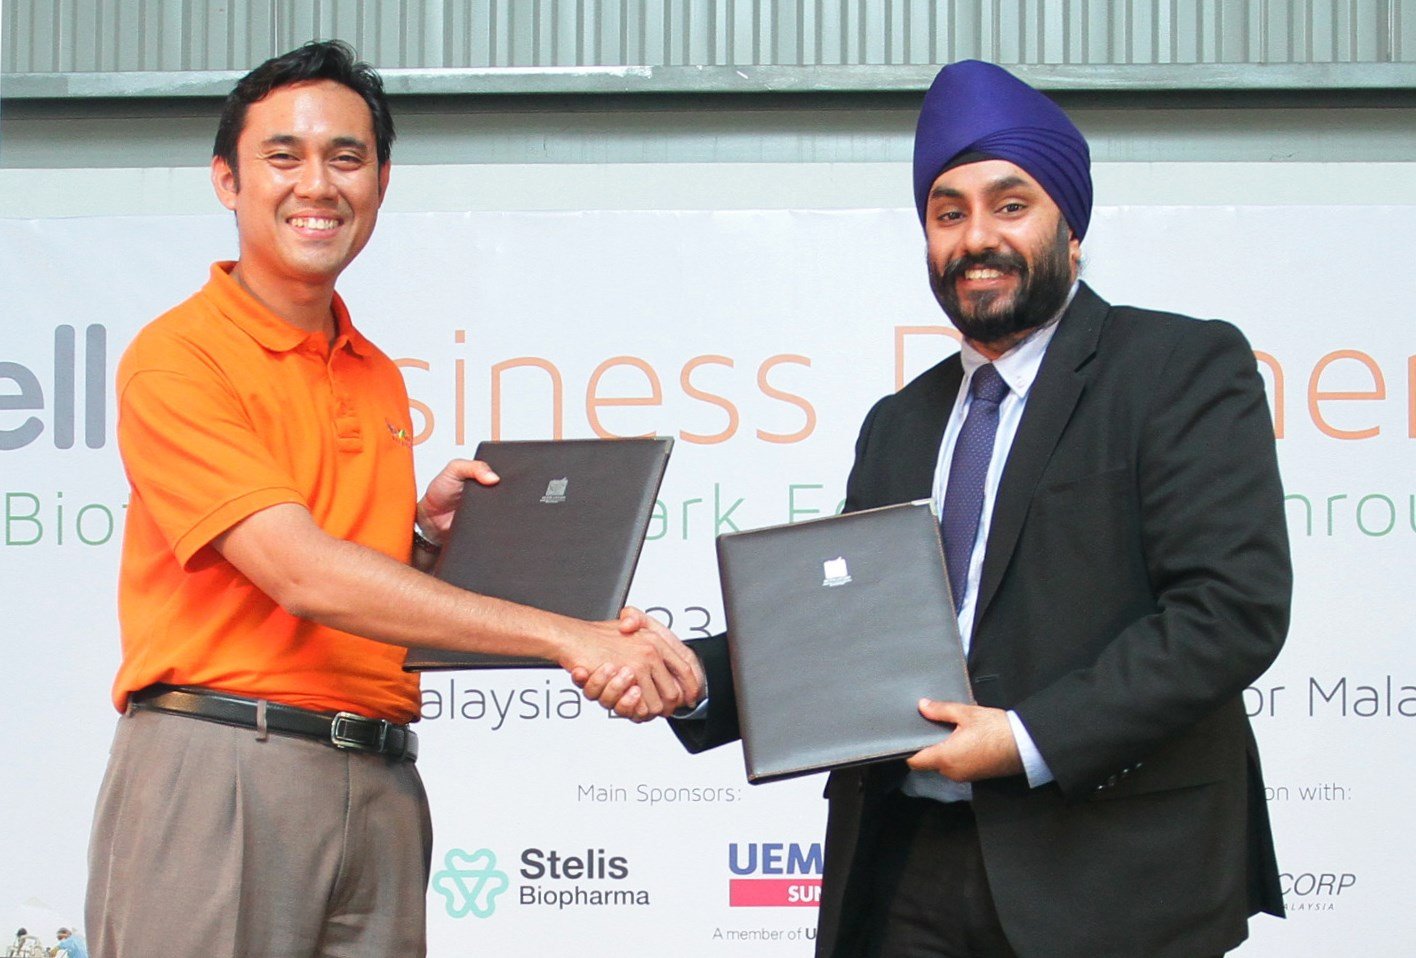 Mr Rizatuddin Ramli, CEO, Malaysian BioXCell (L) and Mr Simranjit Singh, chairman, BioSingapore (R) sign MoU to foster biotechnology growth in Malaysia and Singapore